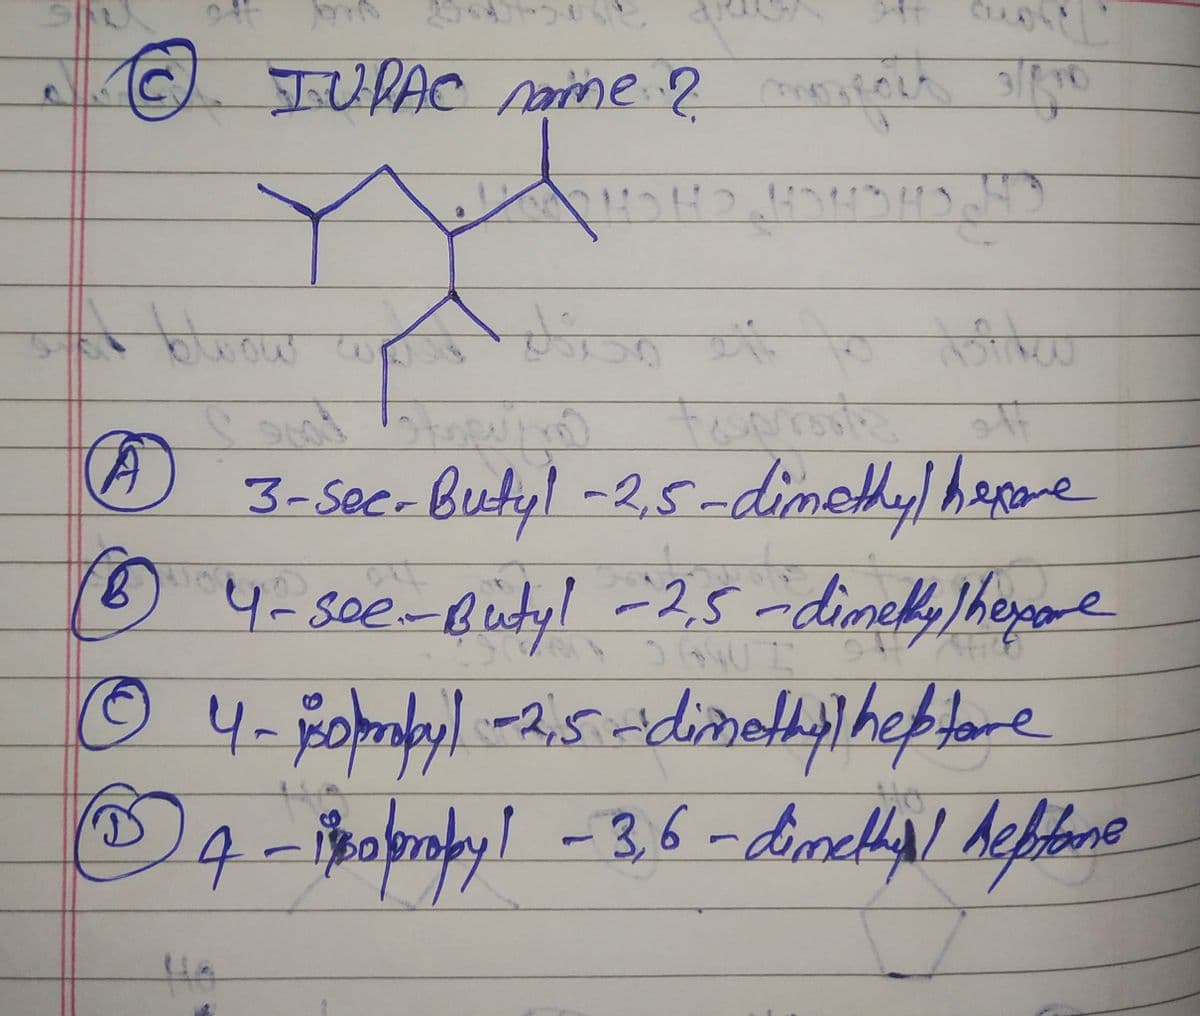 Si
C
© JUPAC same ? MAROLA 3/8
HOHOHOHOHOHO
divo ei
Storu mo
off
B 45000
A 3-Sec-Butyl -2,5-dimethyl hexame
4- See - Buty! - 2,5-dimelly/hexame
Ⓒ 4- isomobyl -2,5-dimethylheptore
D 4-icopropy! - 3,6-dimethyl defitane